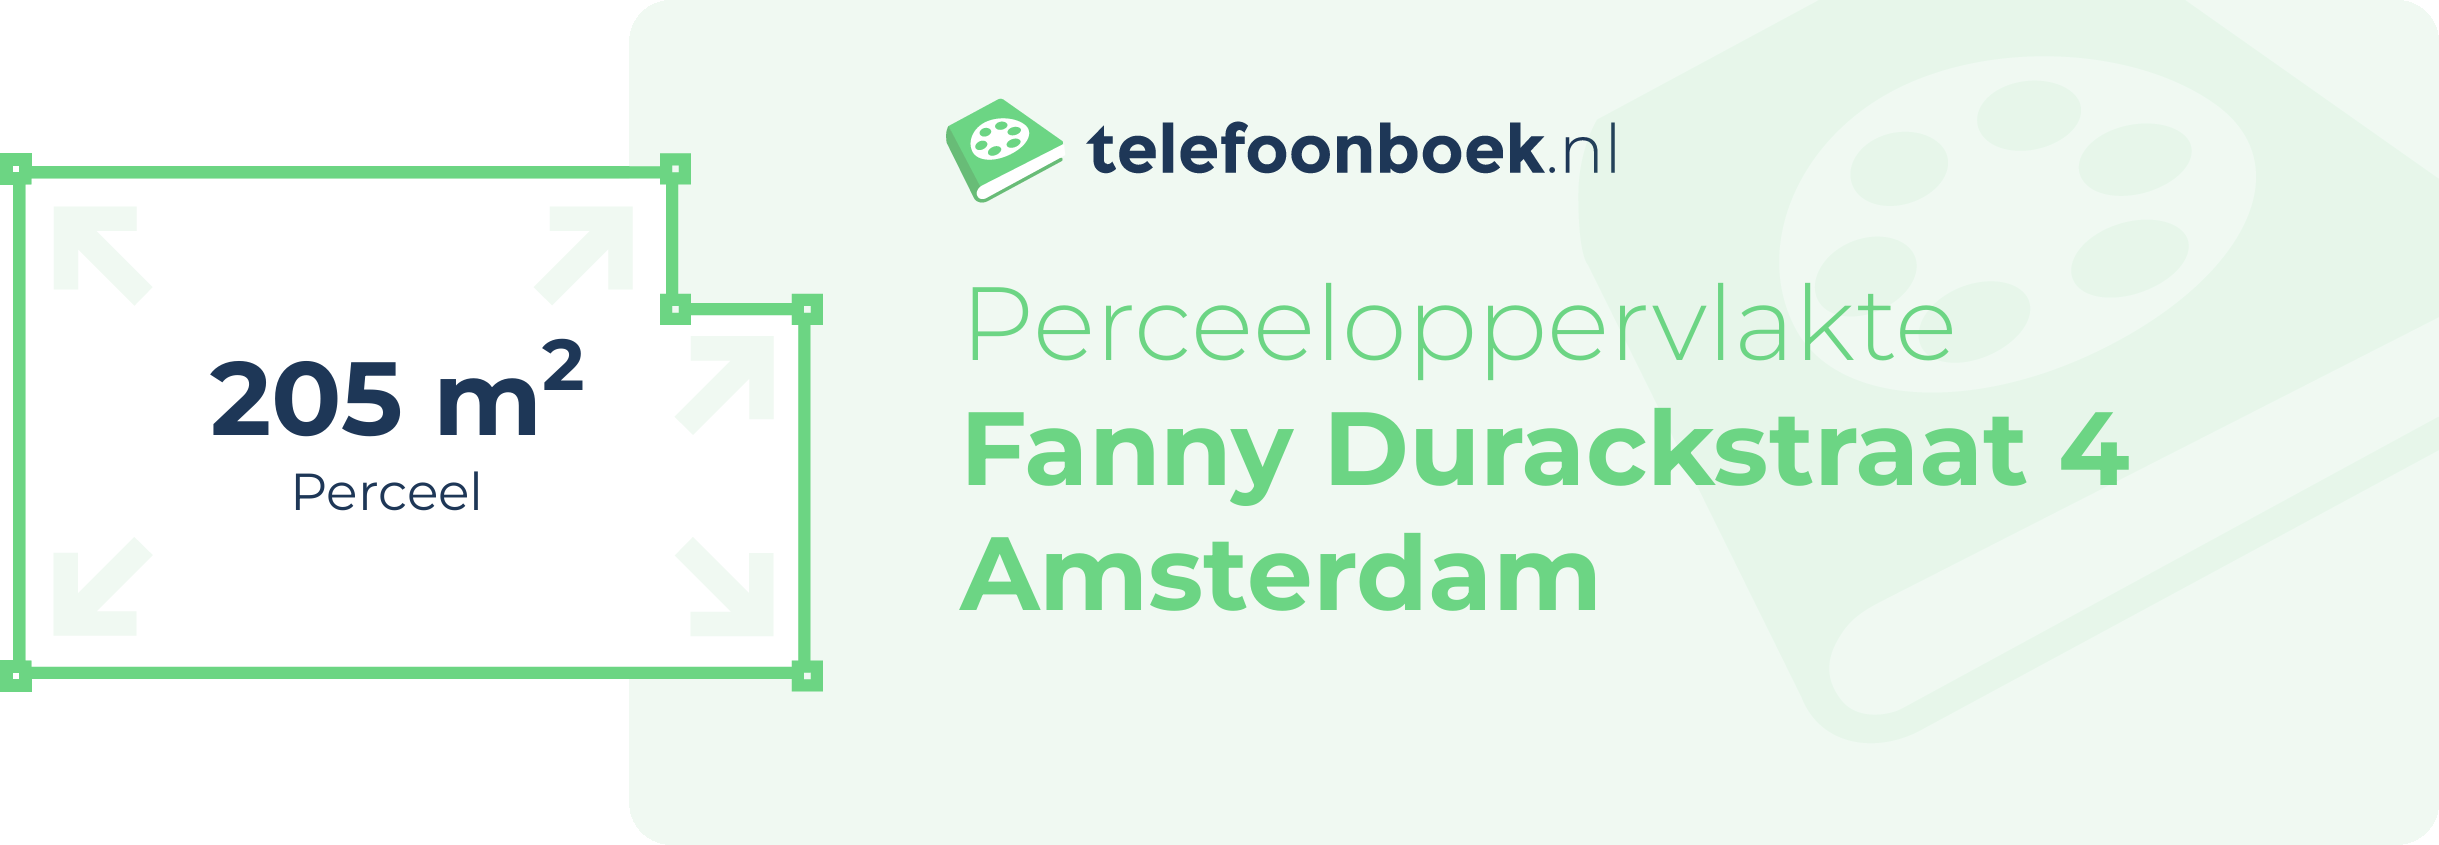 Perceeloppervlakte Fanny Durackstraat 4 Amsterdam